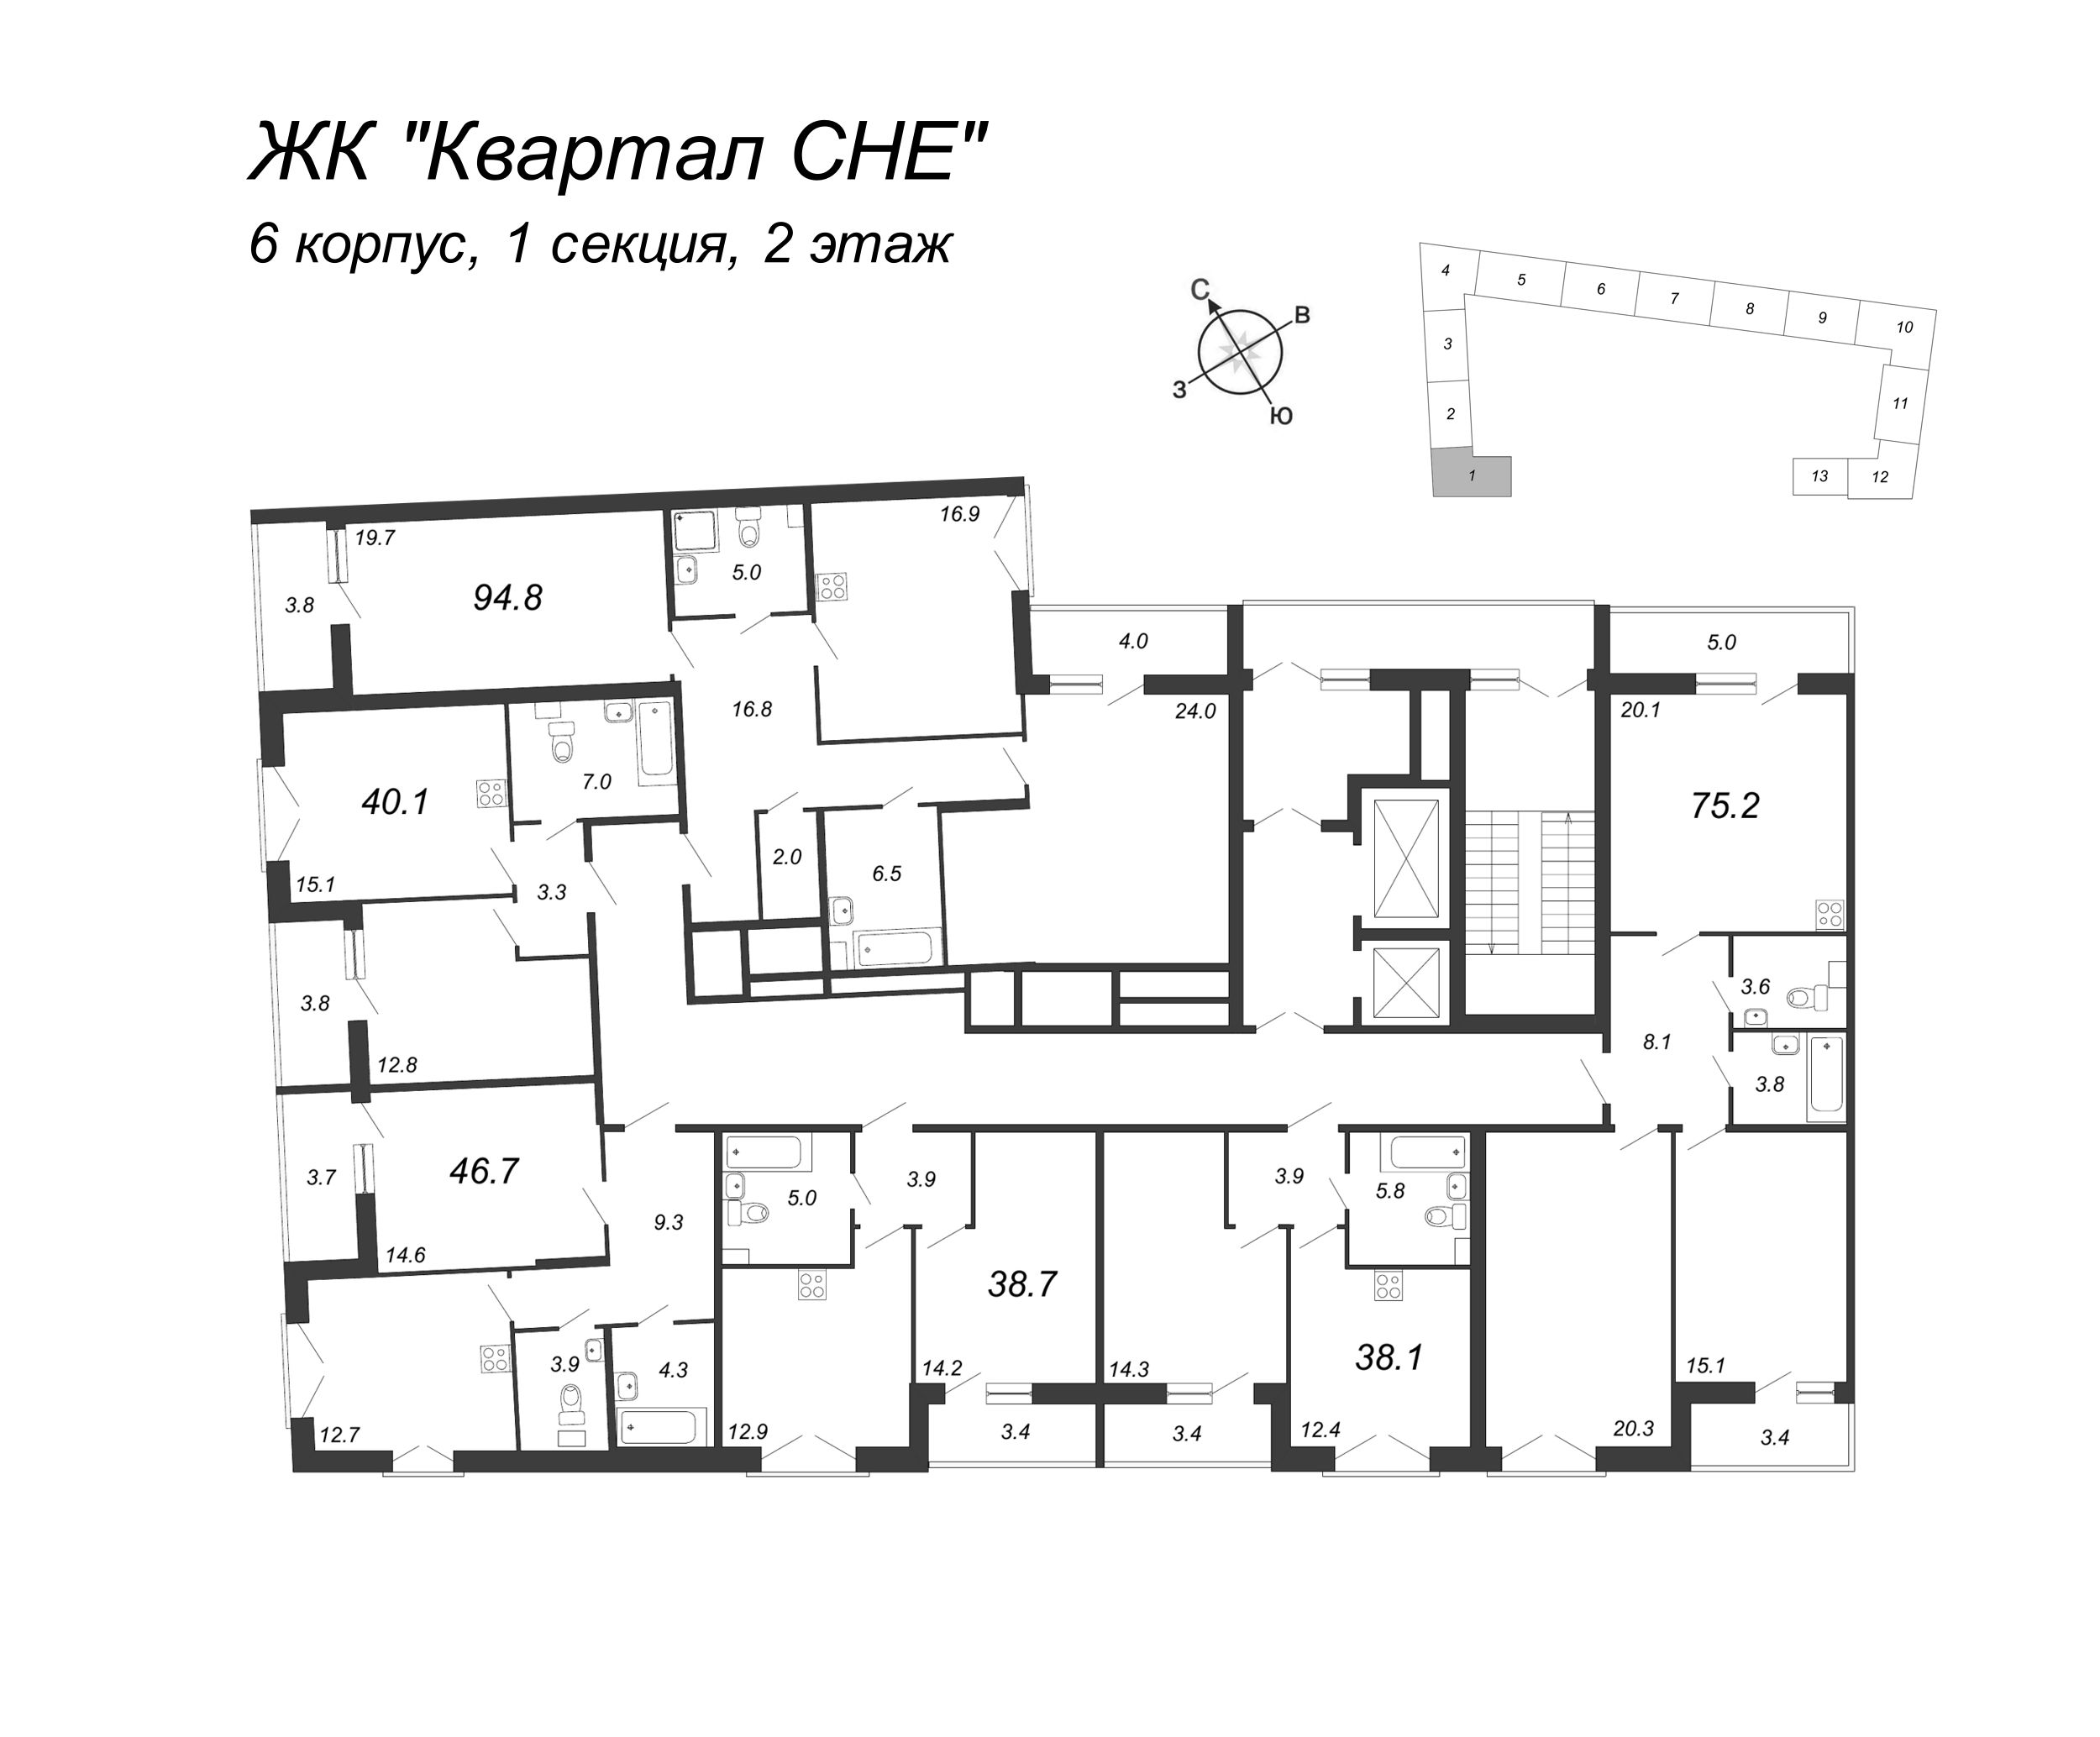 1-комнатная квартира, 47.4 м² в ЖК "Квартал Che" - планировка этажа